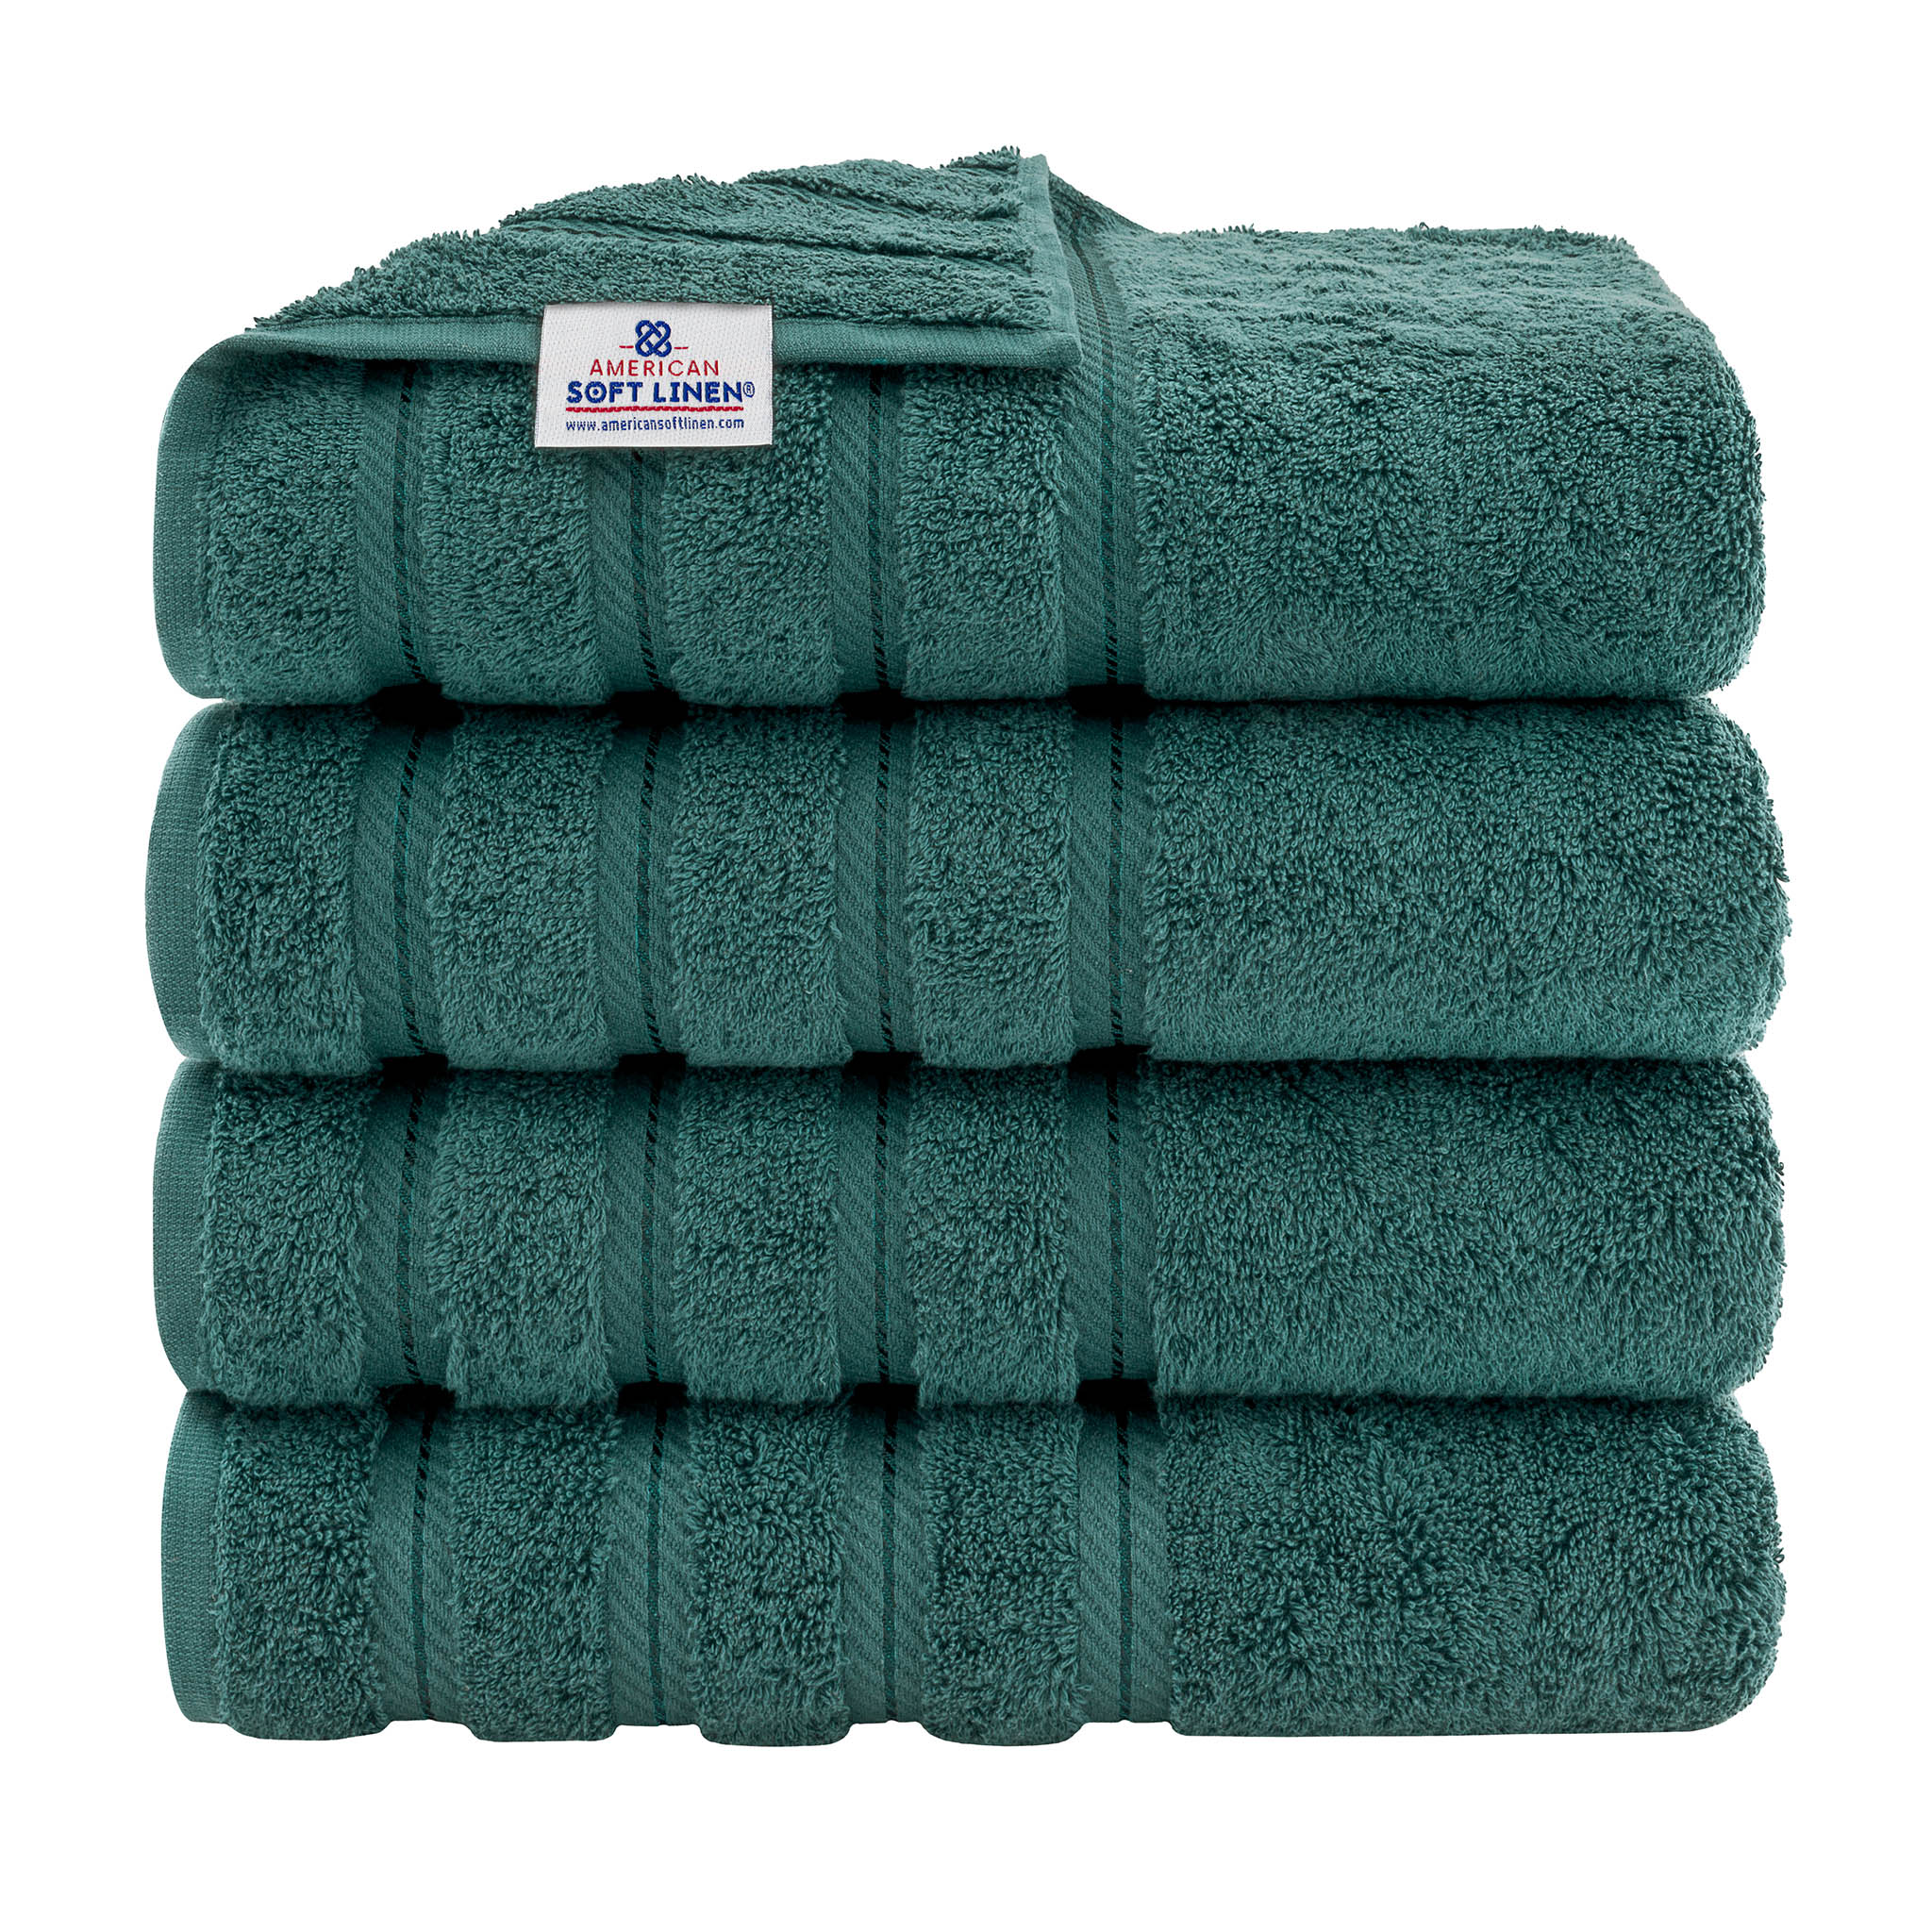 American Soft Linen 100% Turkish Cotton 4 Pack Bath Towel Set colonial-blue-1